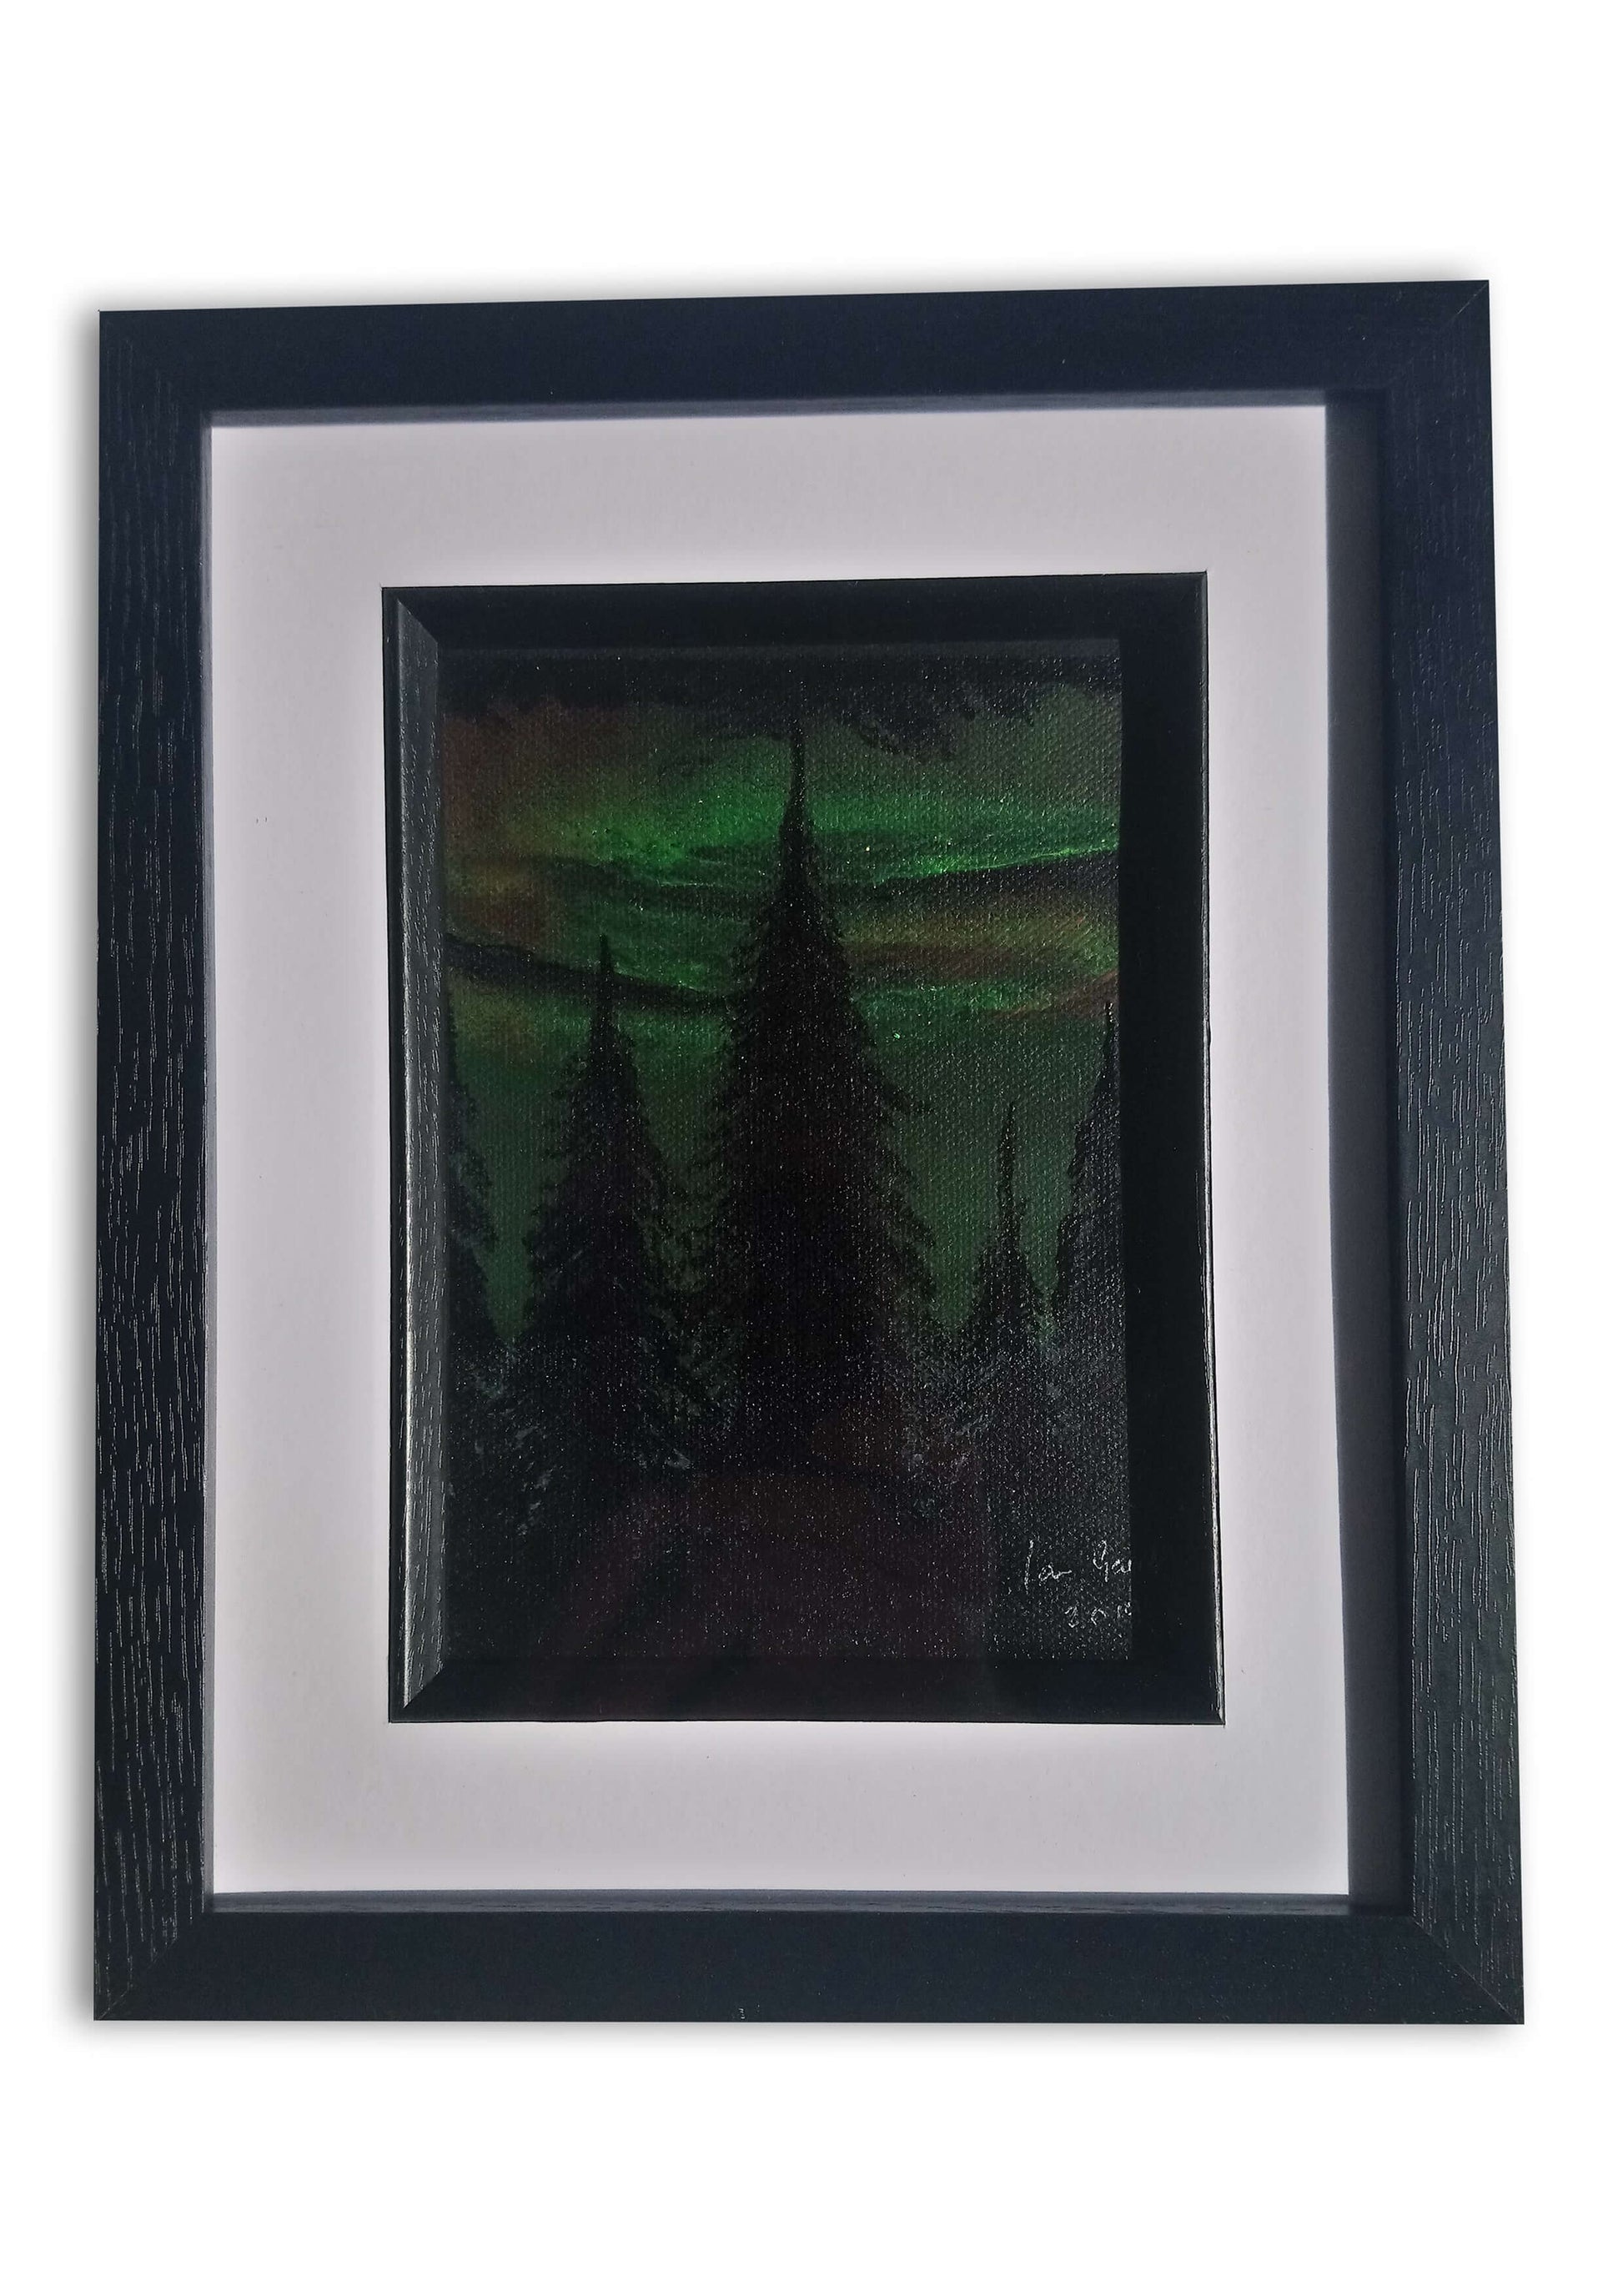 Aurora Borialis over a Pine Forest, ©Ian Garrett 2019.  Acrylic on Canvas 7 x 5 inches.